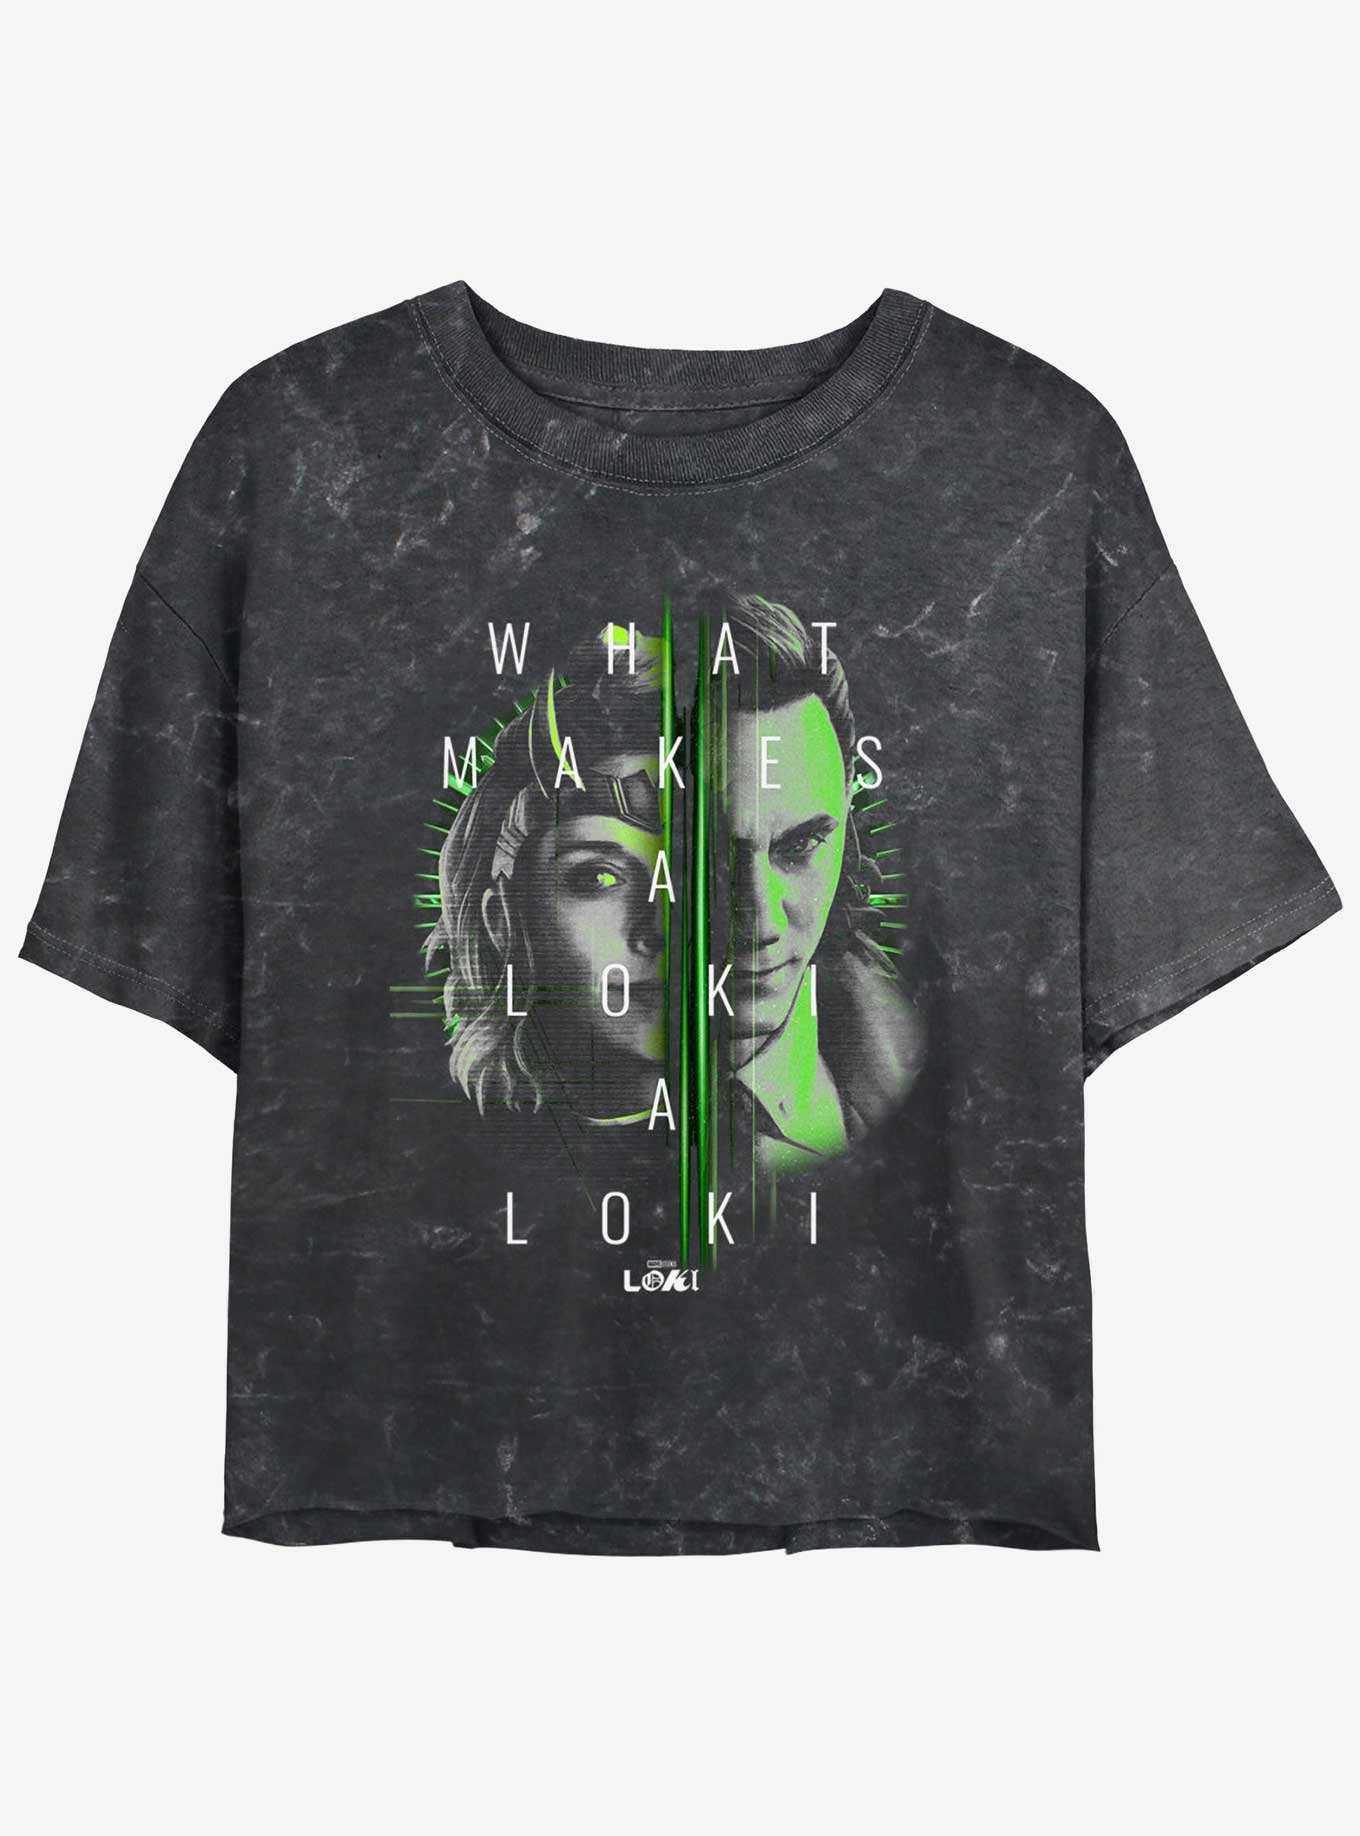 Marvel Loki Sylvie and Loki Split Portrait Girls Mineral Wash Crop T-Shirt, , hi-res